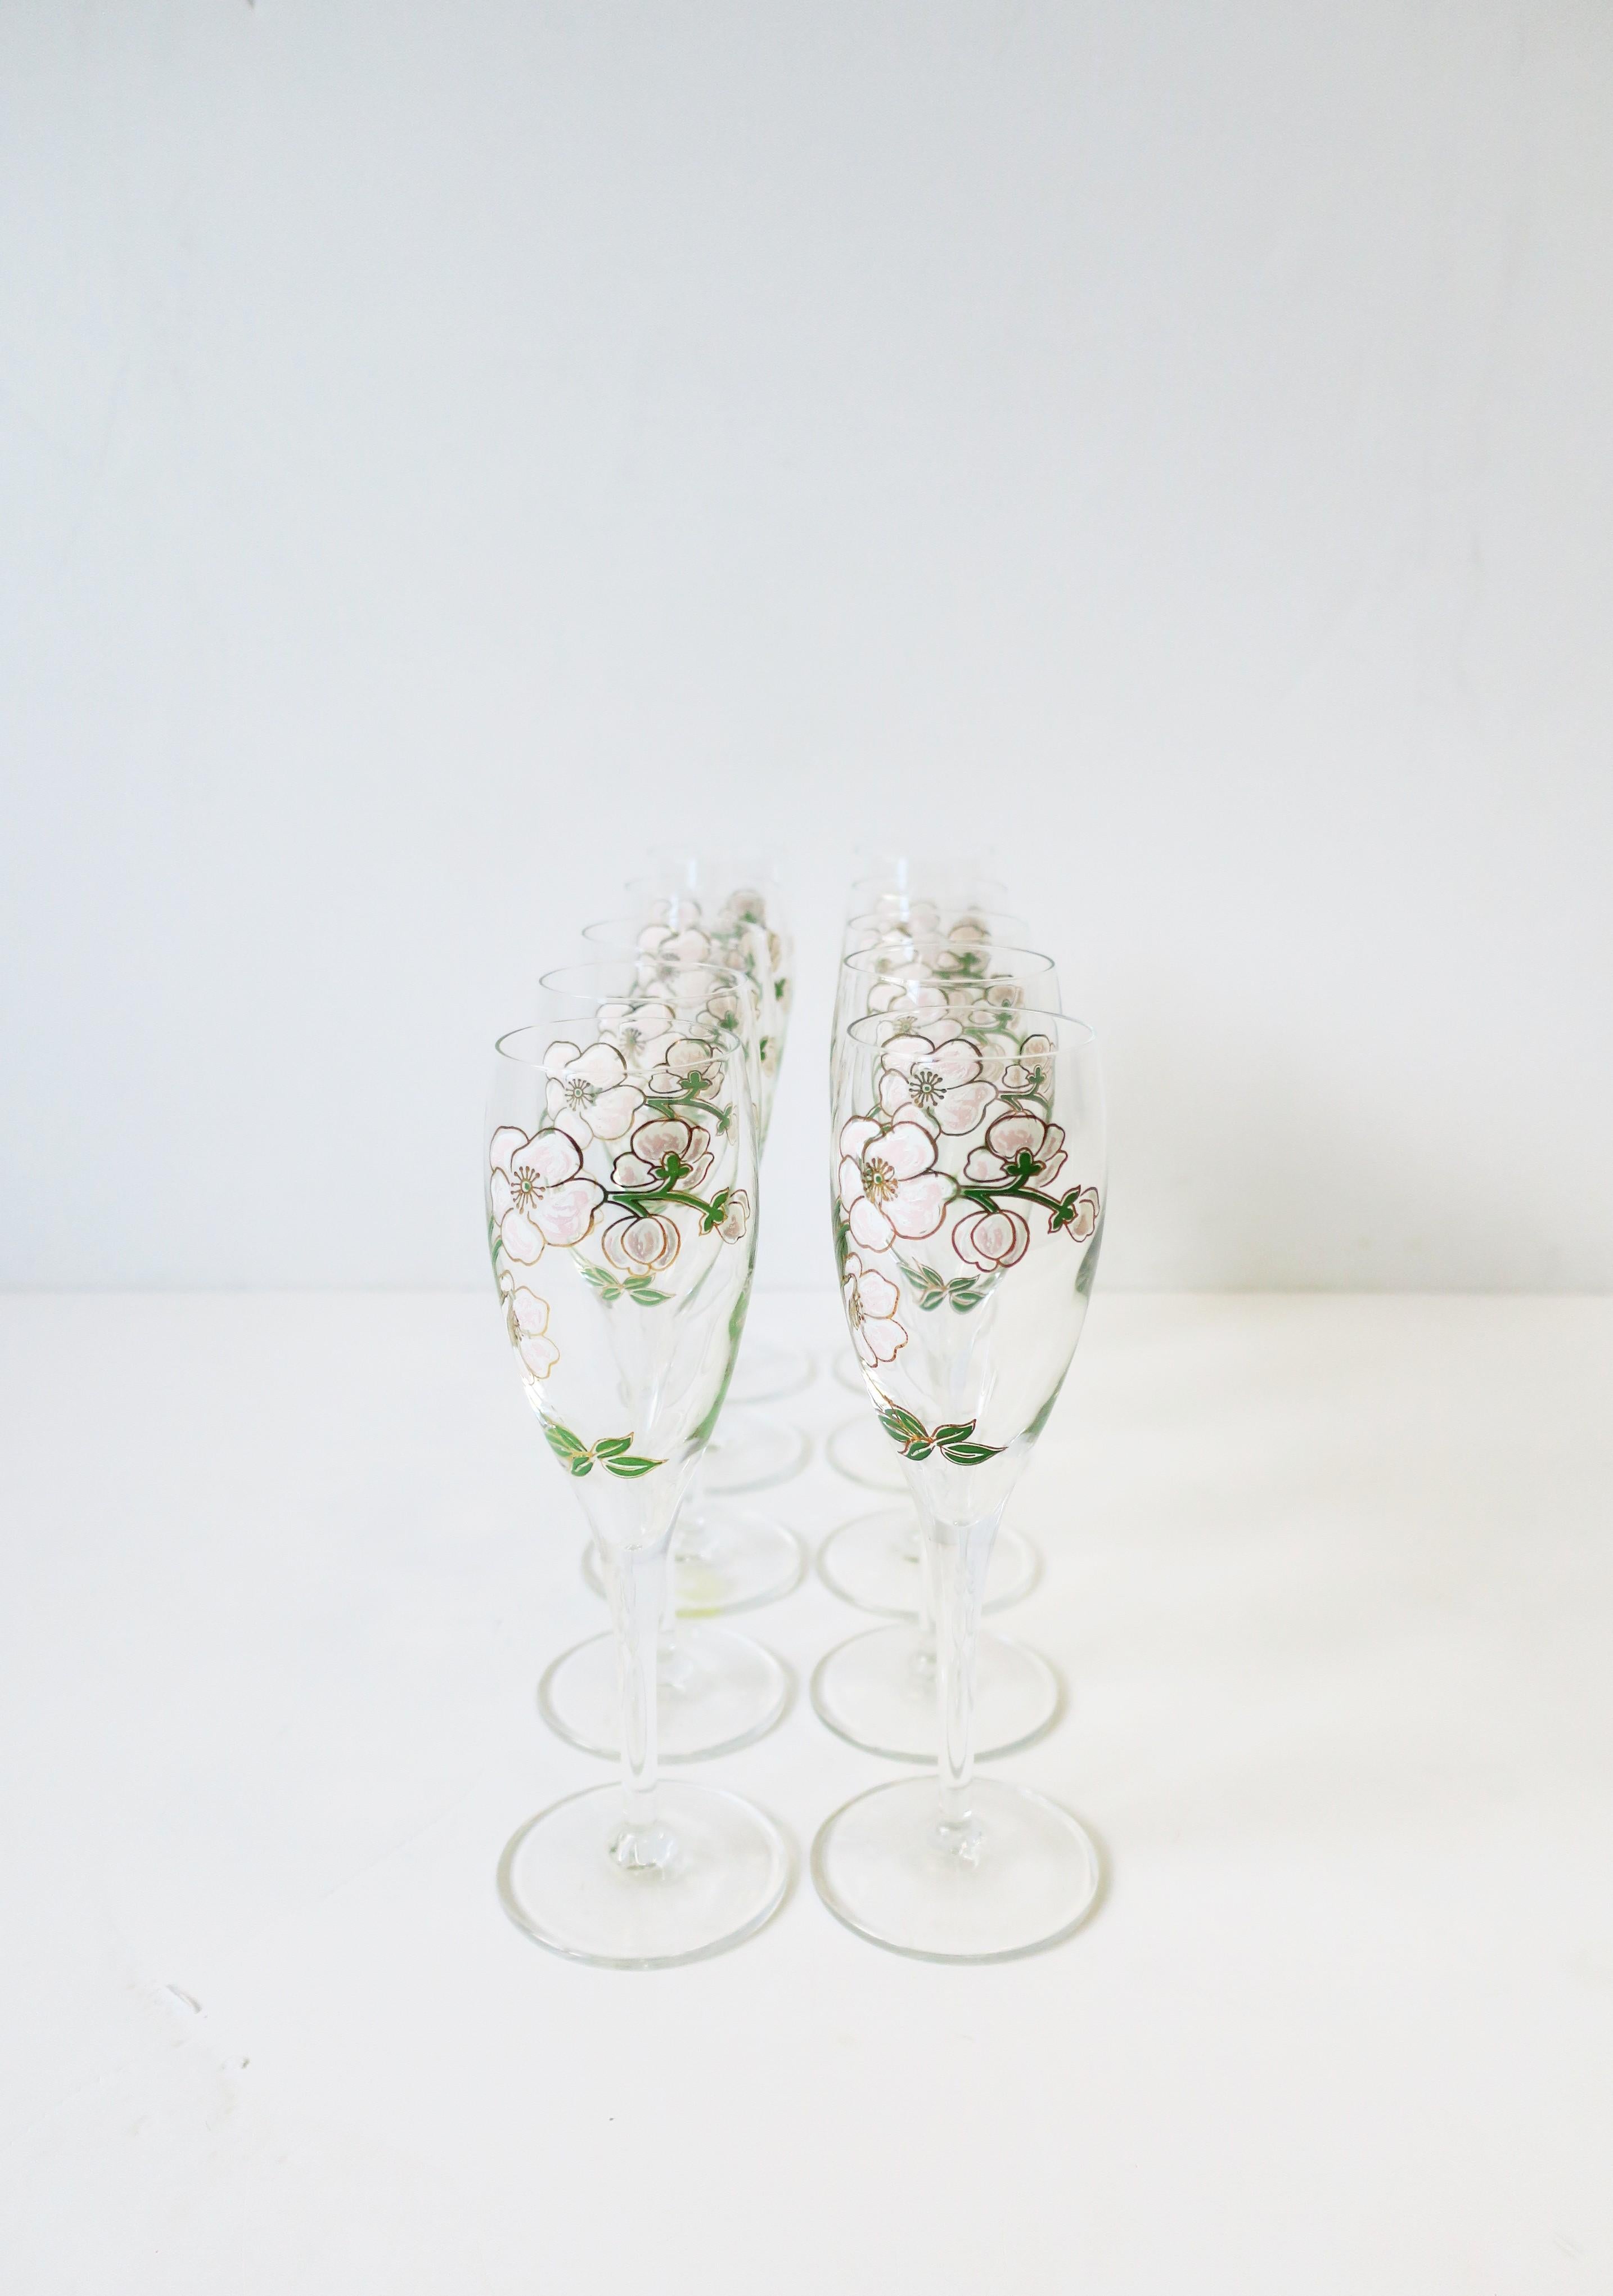 Polychromed Vintage Perrier-Jouet French Champagne Flute Glasses Art Nouveau, Set of 10